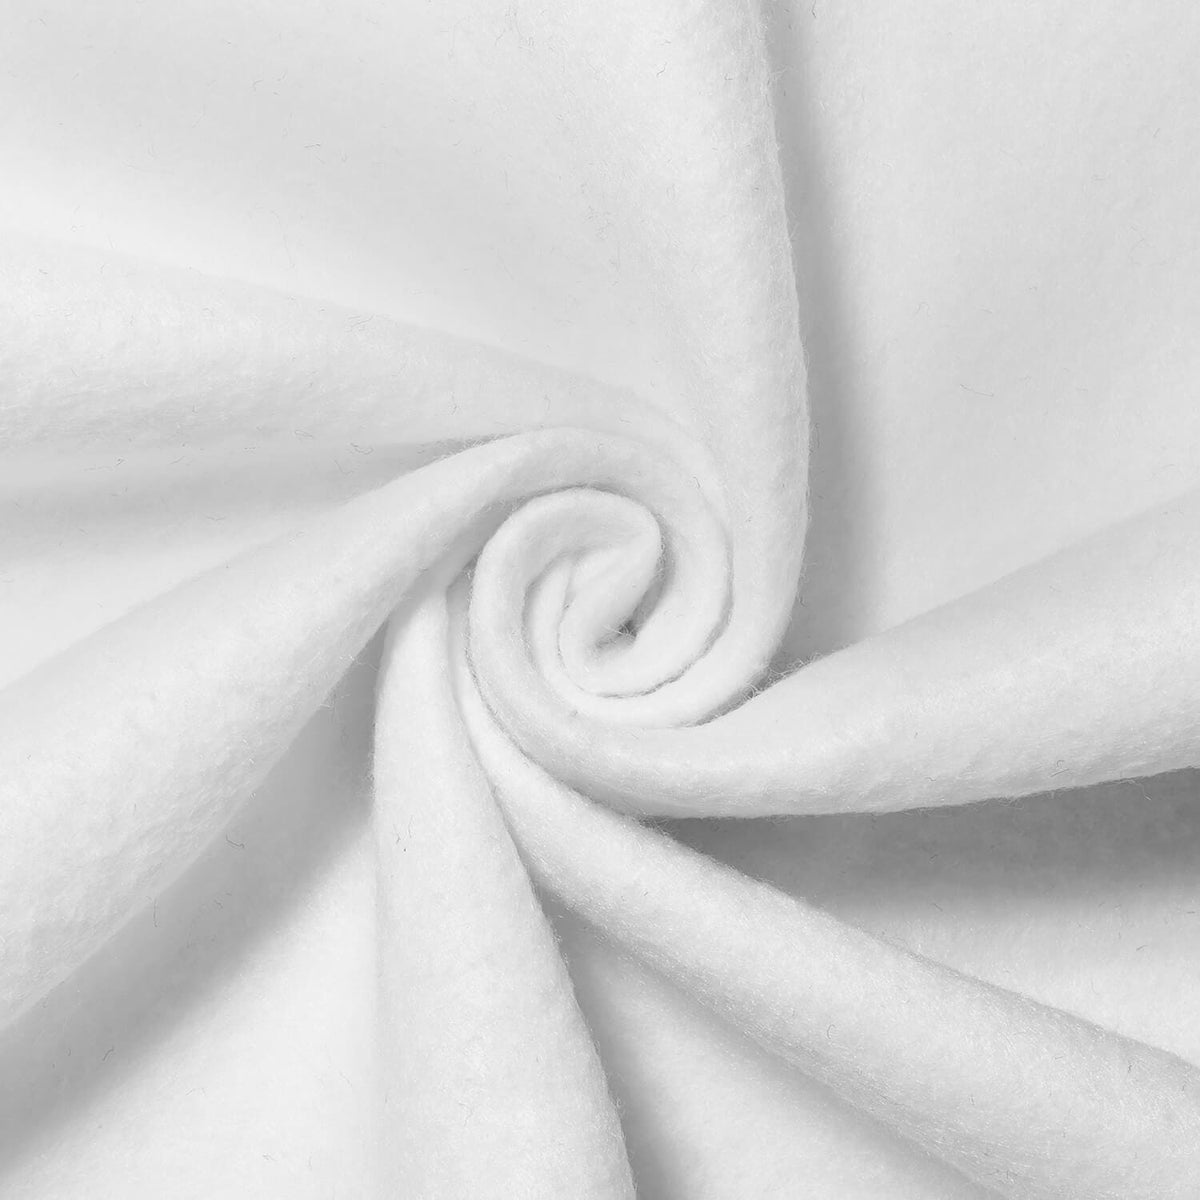 Knit Elastic  Fabric Wholesale Direct